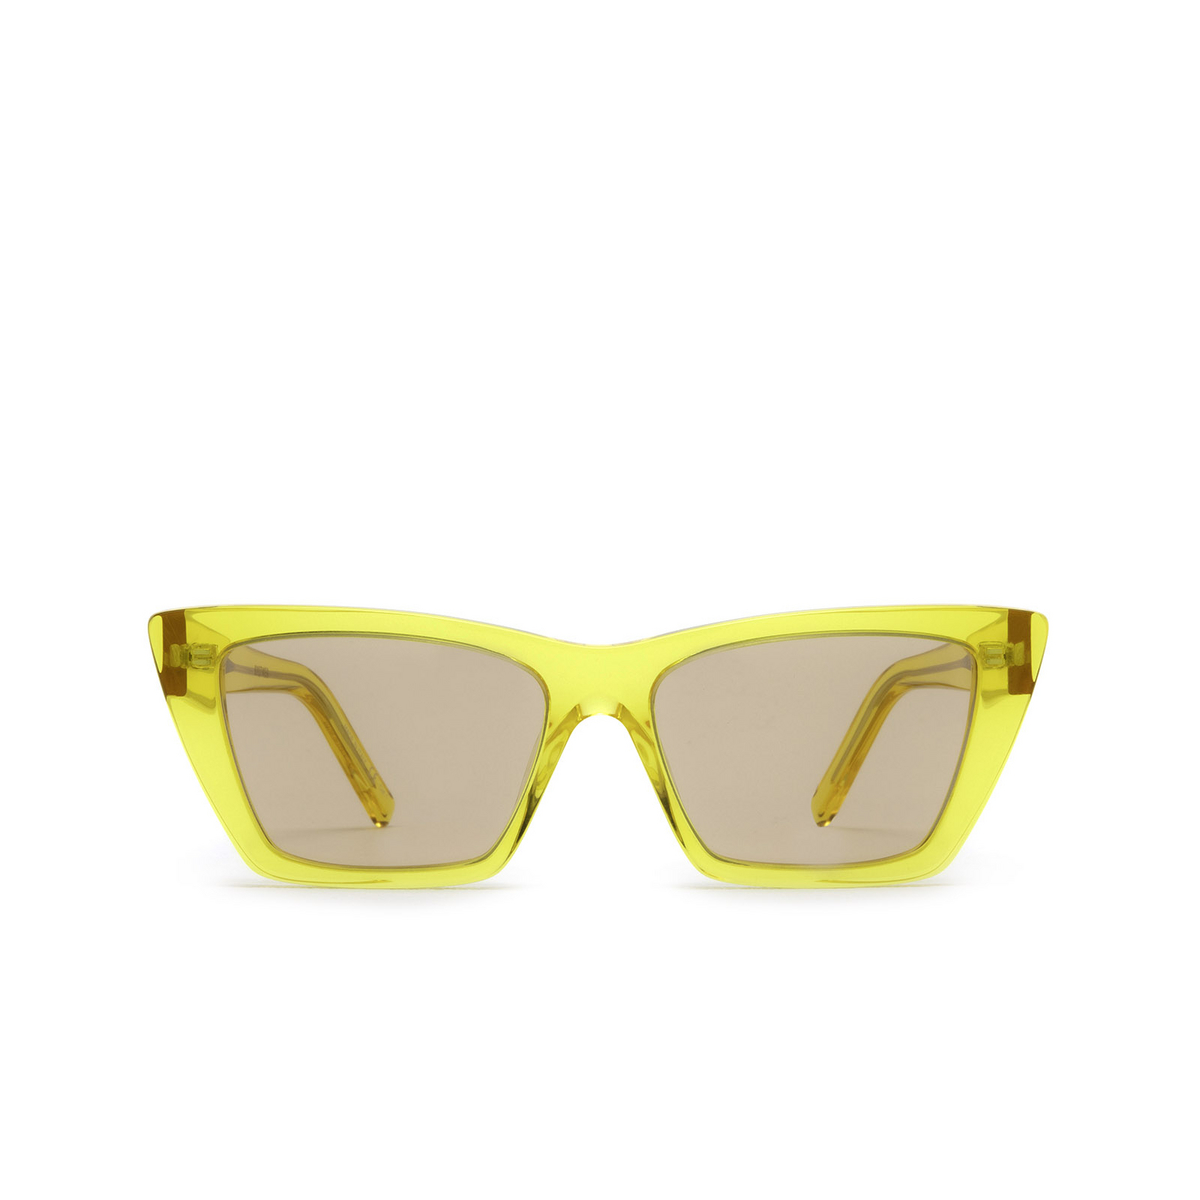 Saint Laurent® Cat-eye Sunglasses: Mica SL 276 color Yellow 027 - front view.